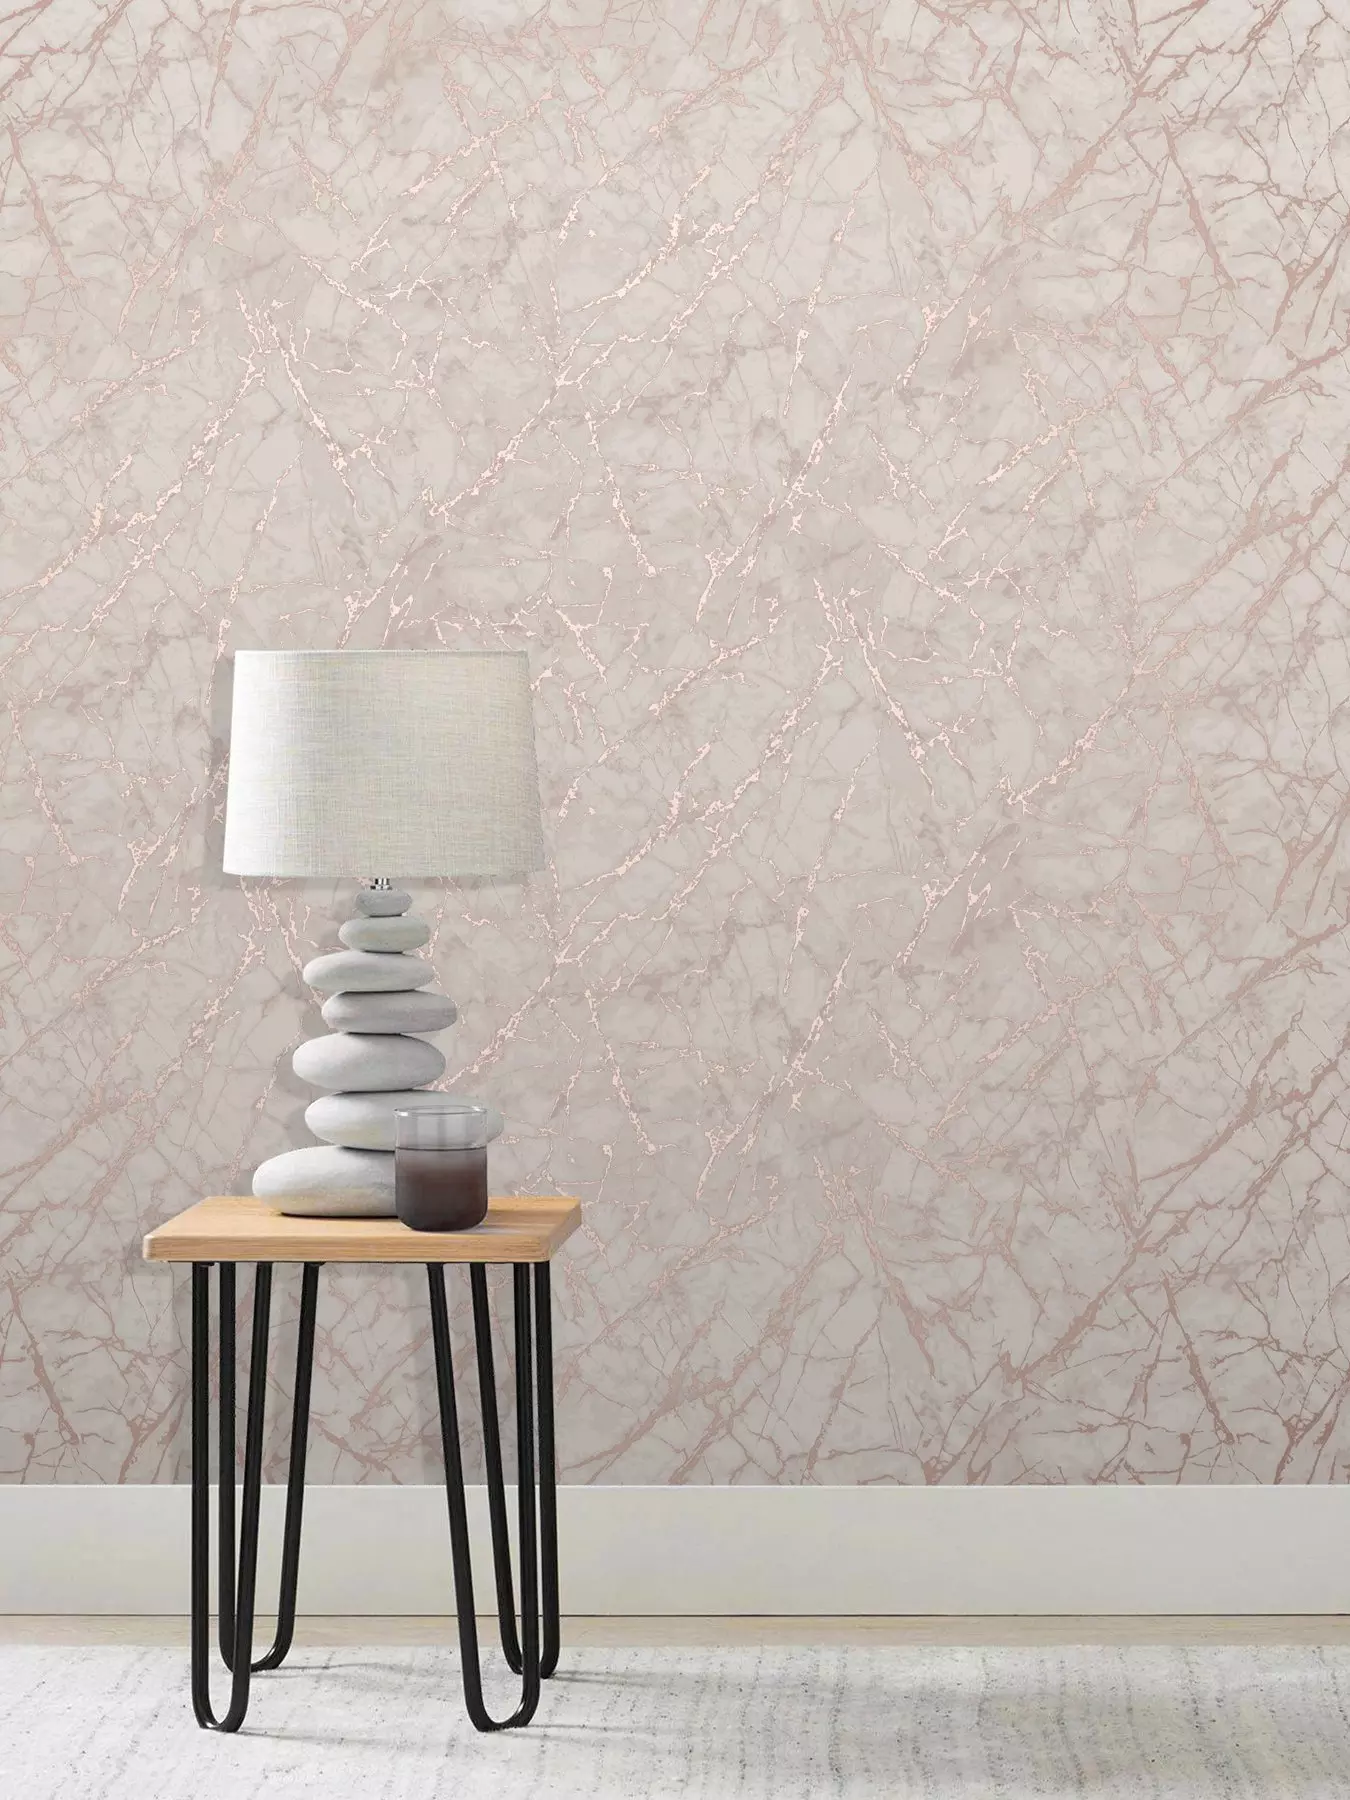 Fine Decor Apex Rose gold effect Geometric Smooth Wallpaper